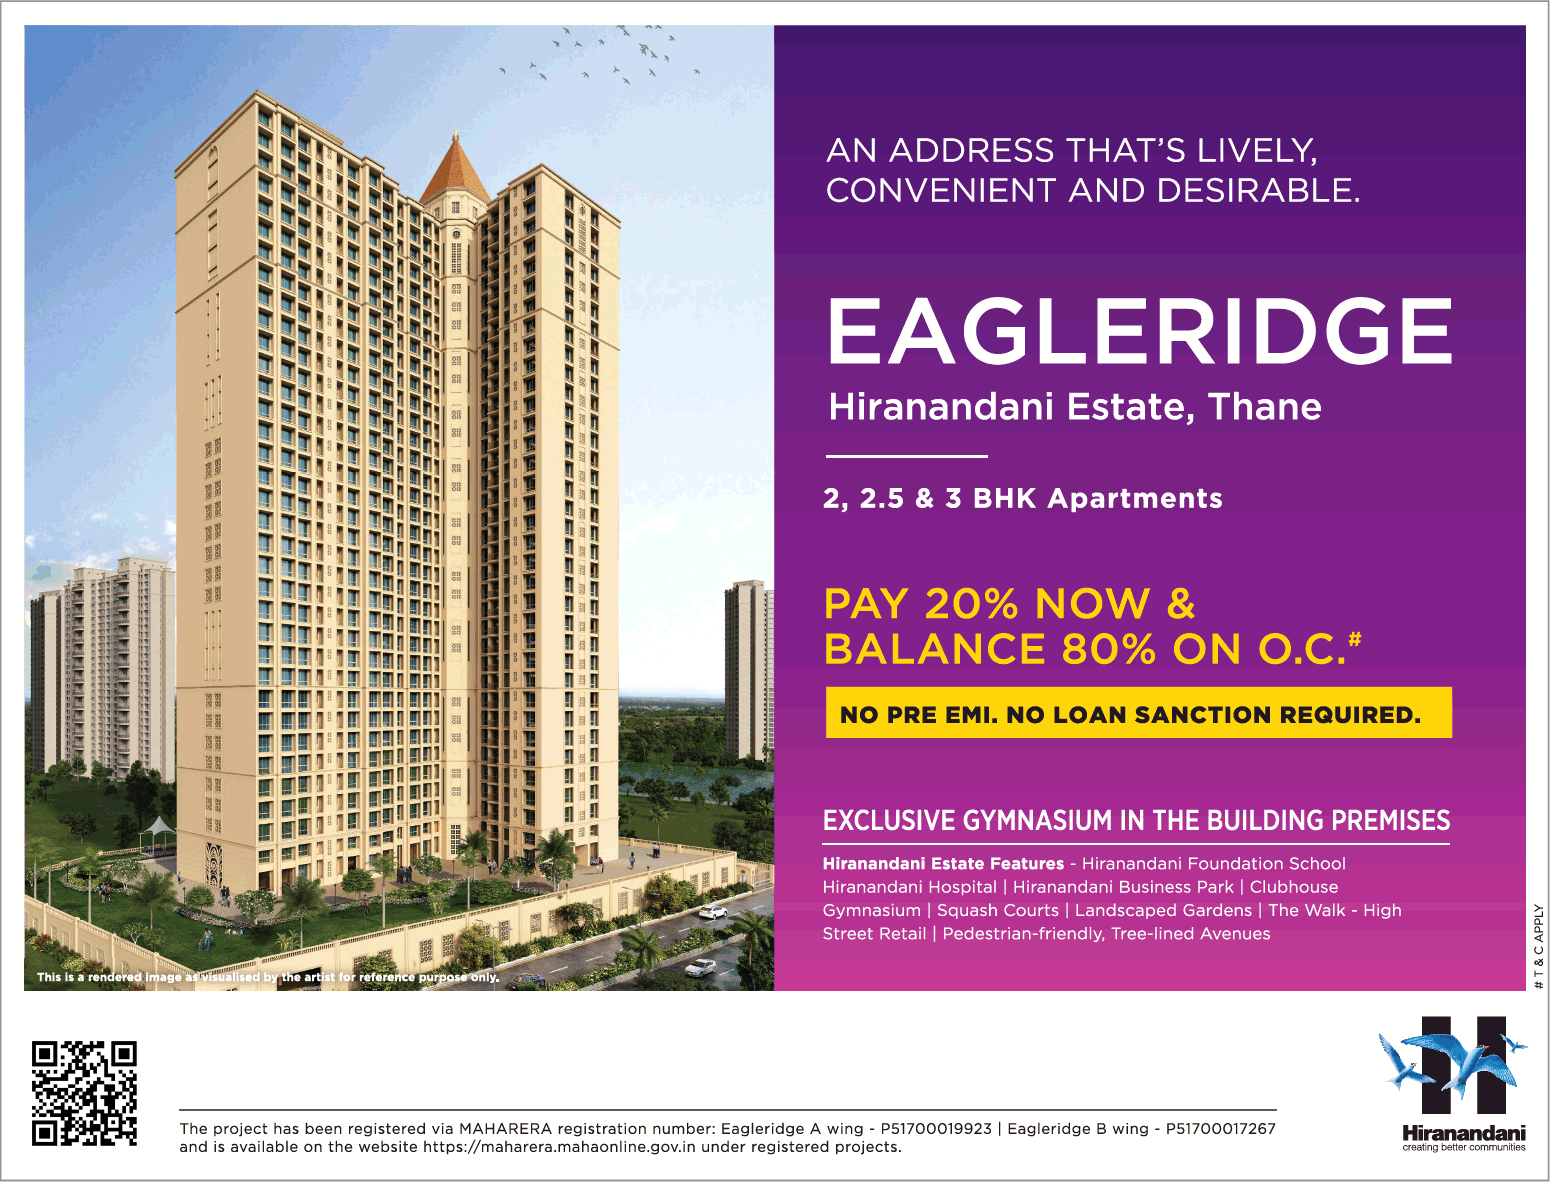 Pay 20% now & balance 80% on OC at Hiranandani Eagleridge in Mumbai Update